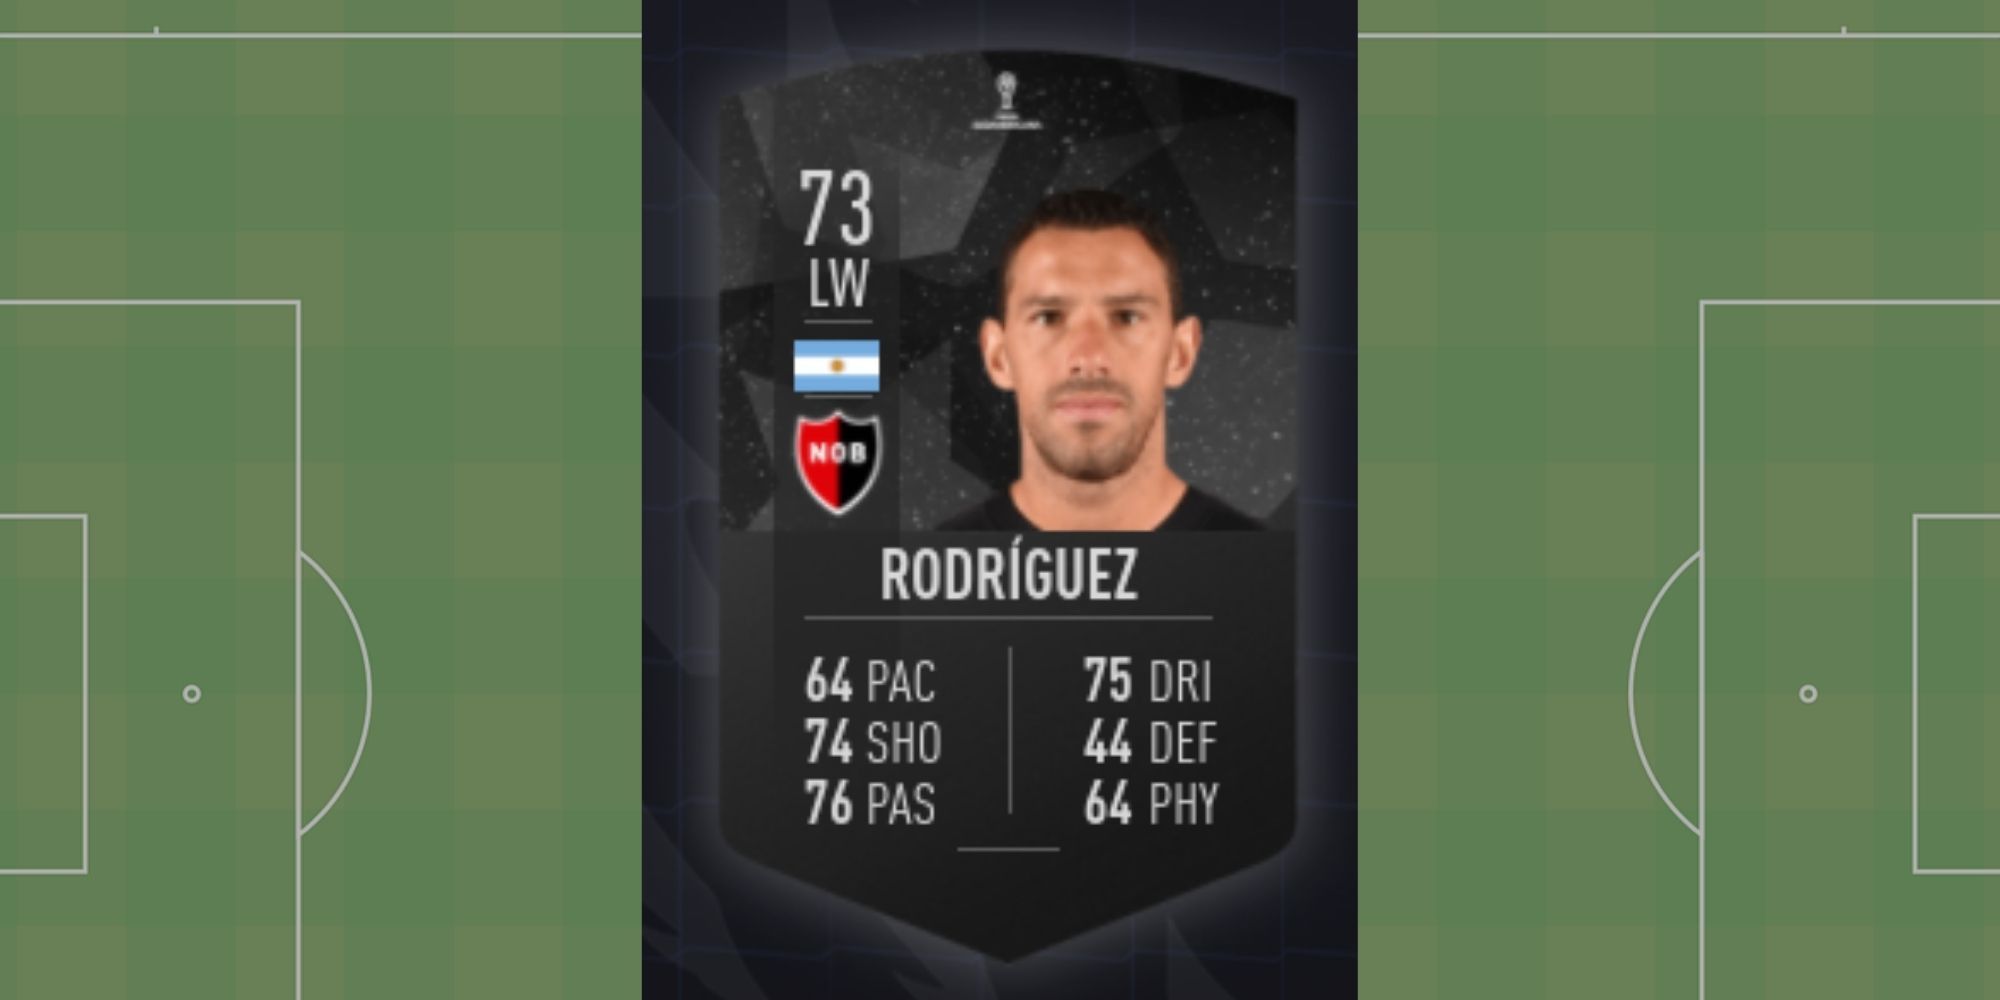 Maximiliano Rodriguez's FUT card in FIFA 22.